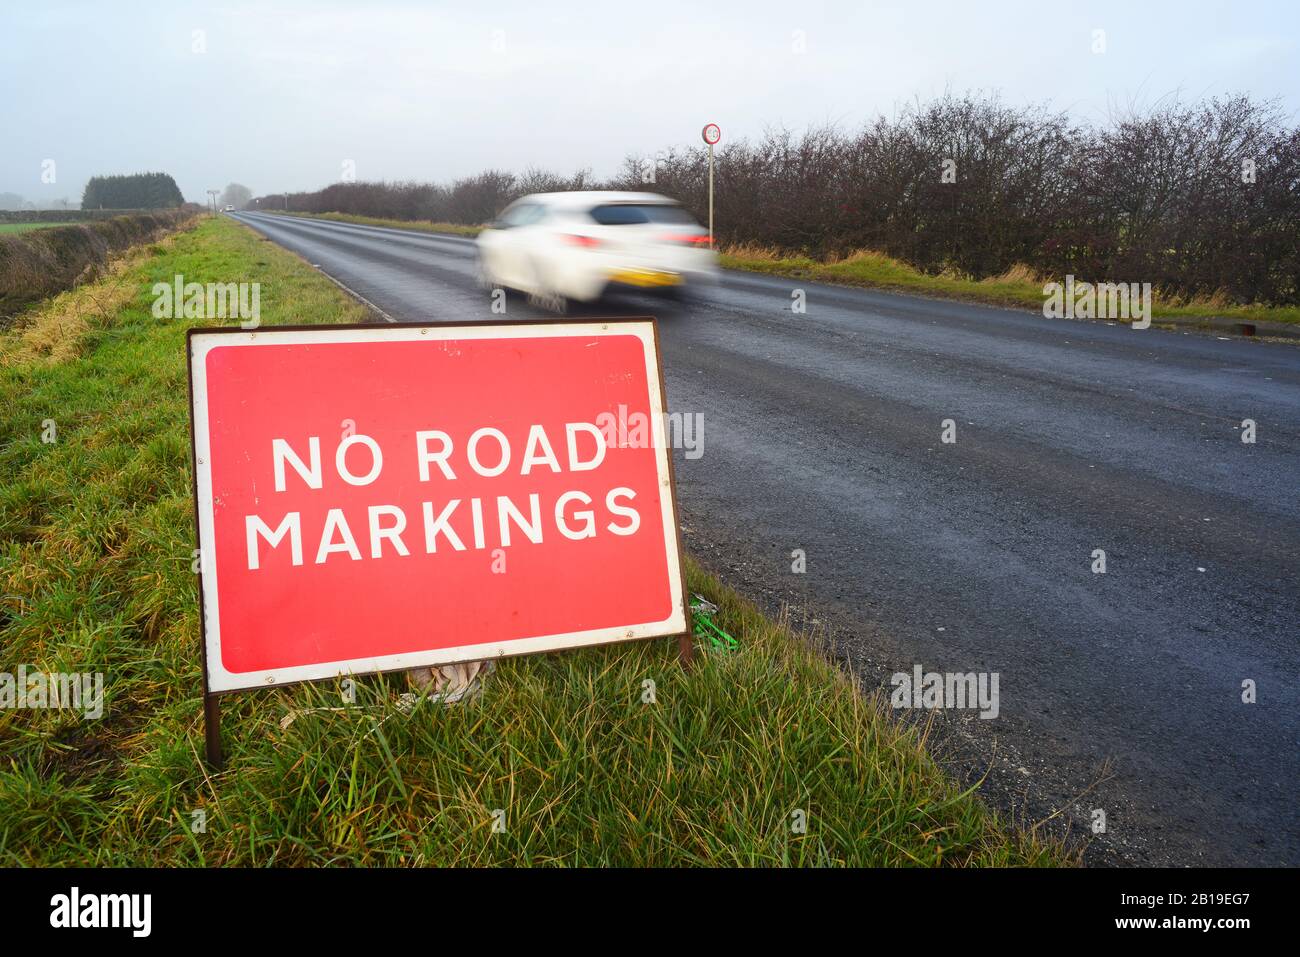 no road markings on road ahead warning sign after resurfacing leed yorkshire united kingdom Stock Photo